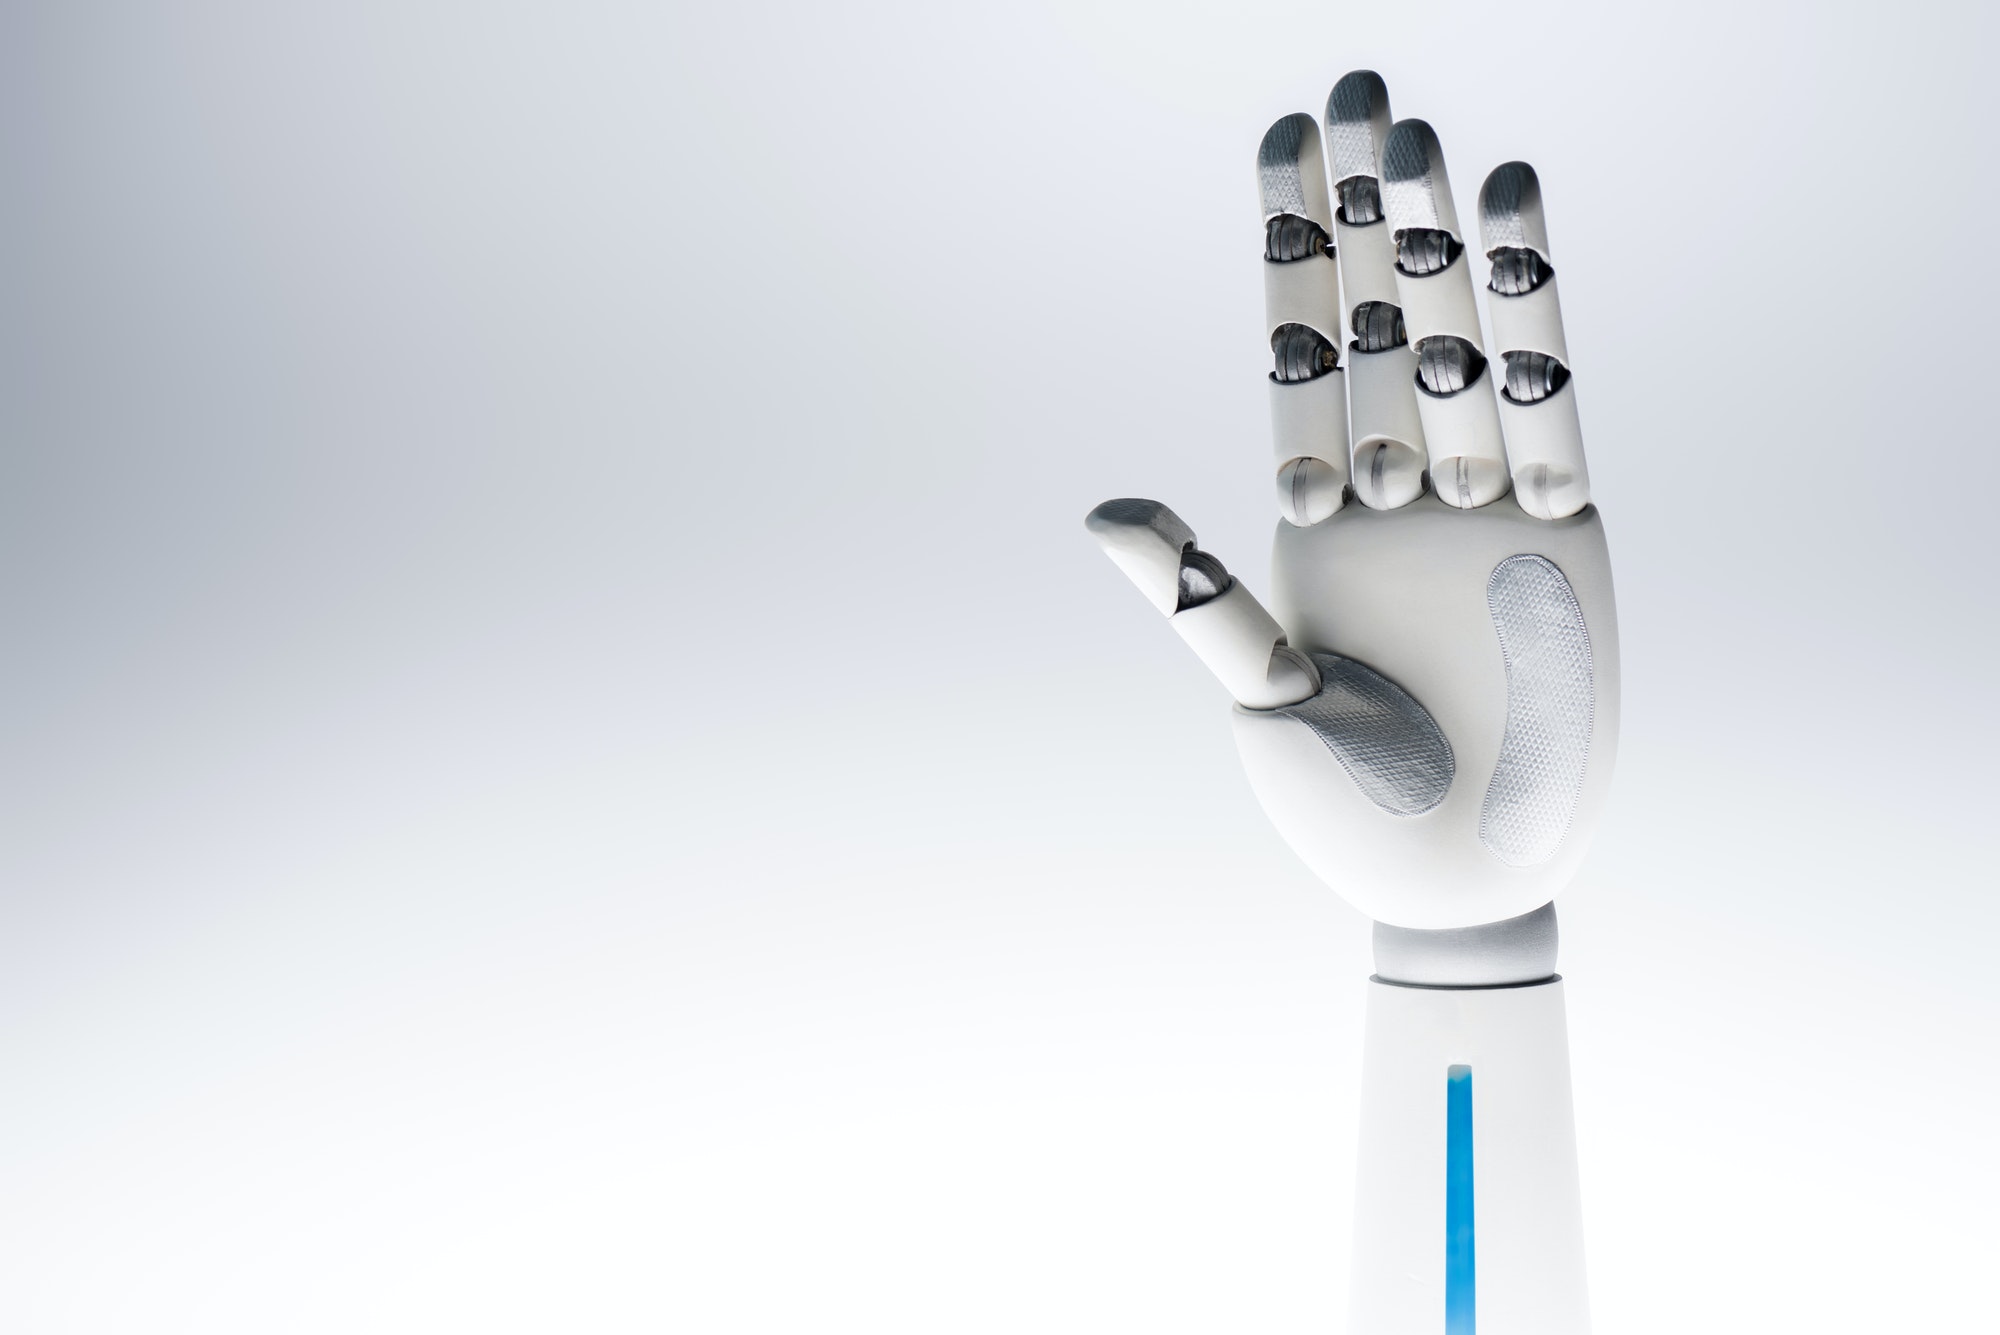 robot waving hand isolated on grey